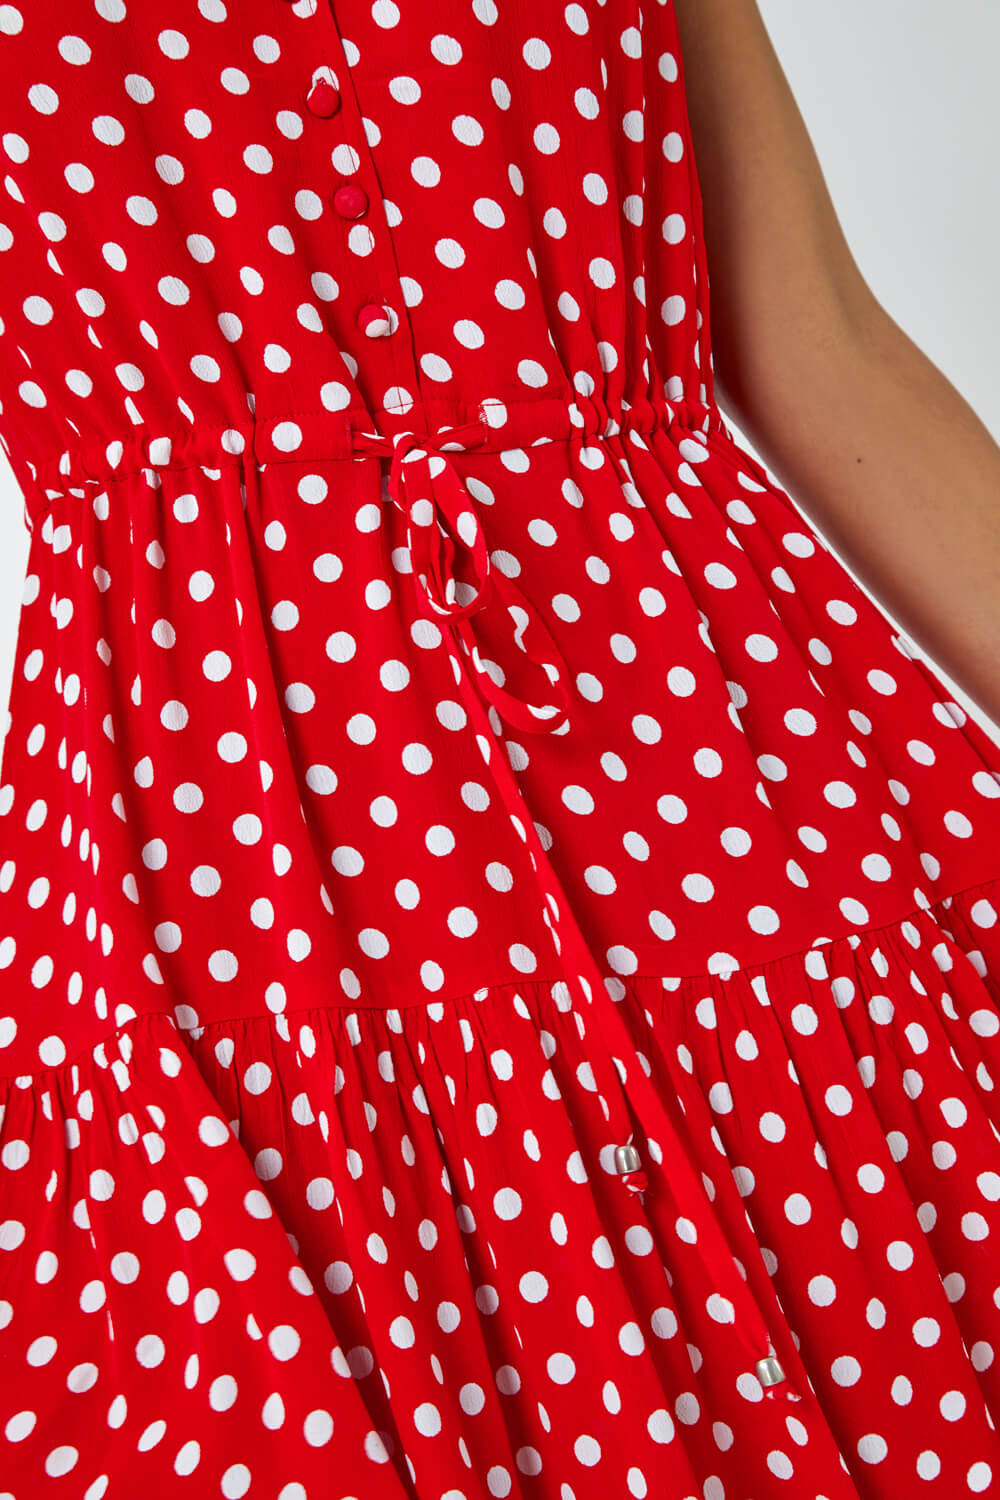 Red Polka Dot Print Sleeveless Dress, Image 5 of 5